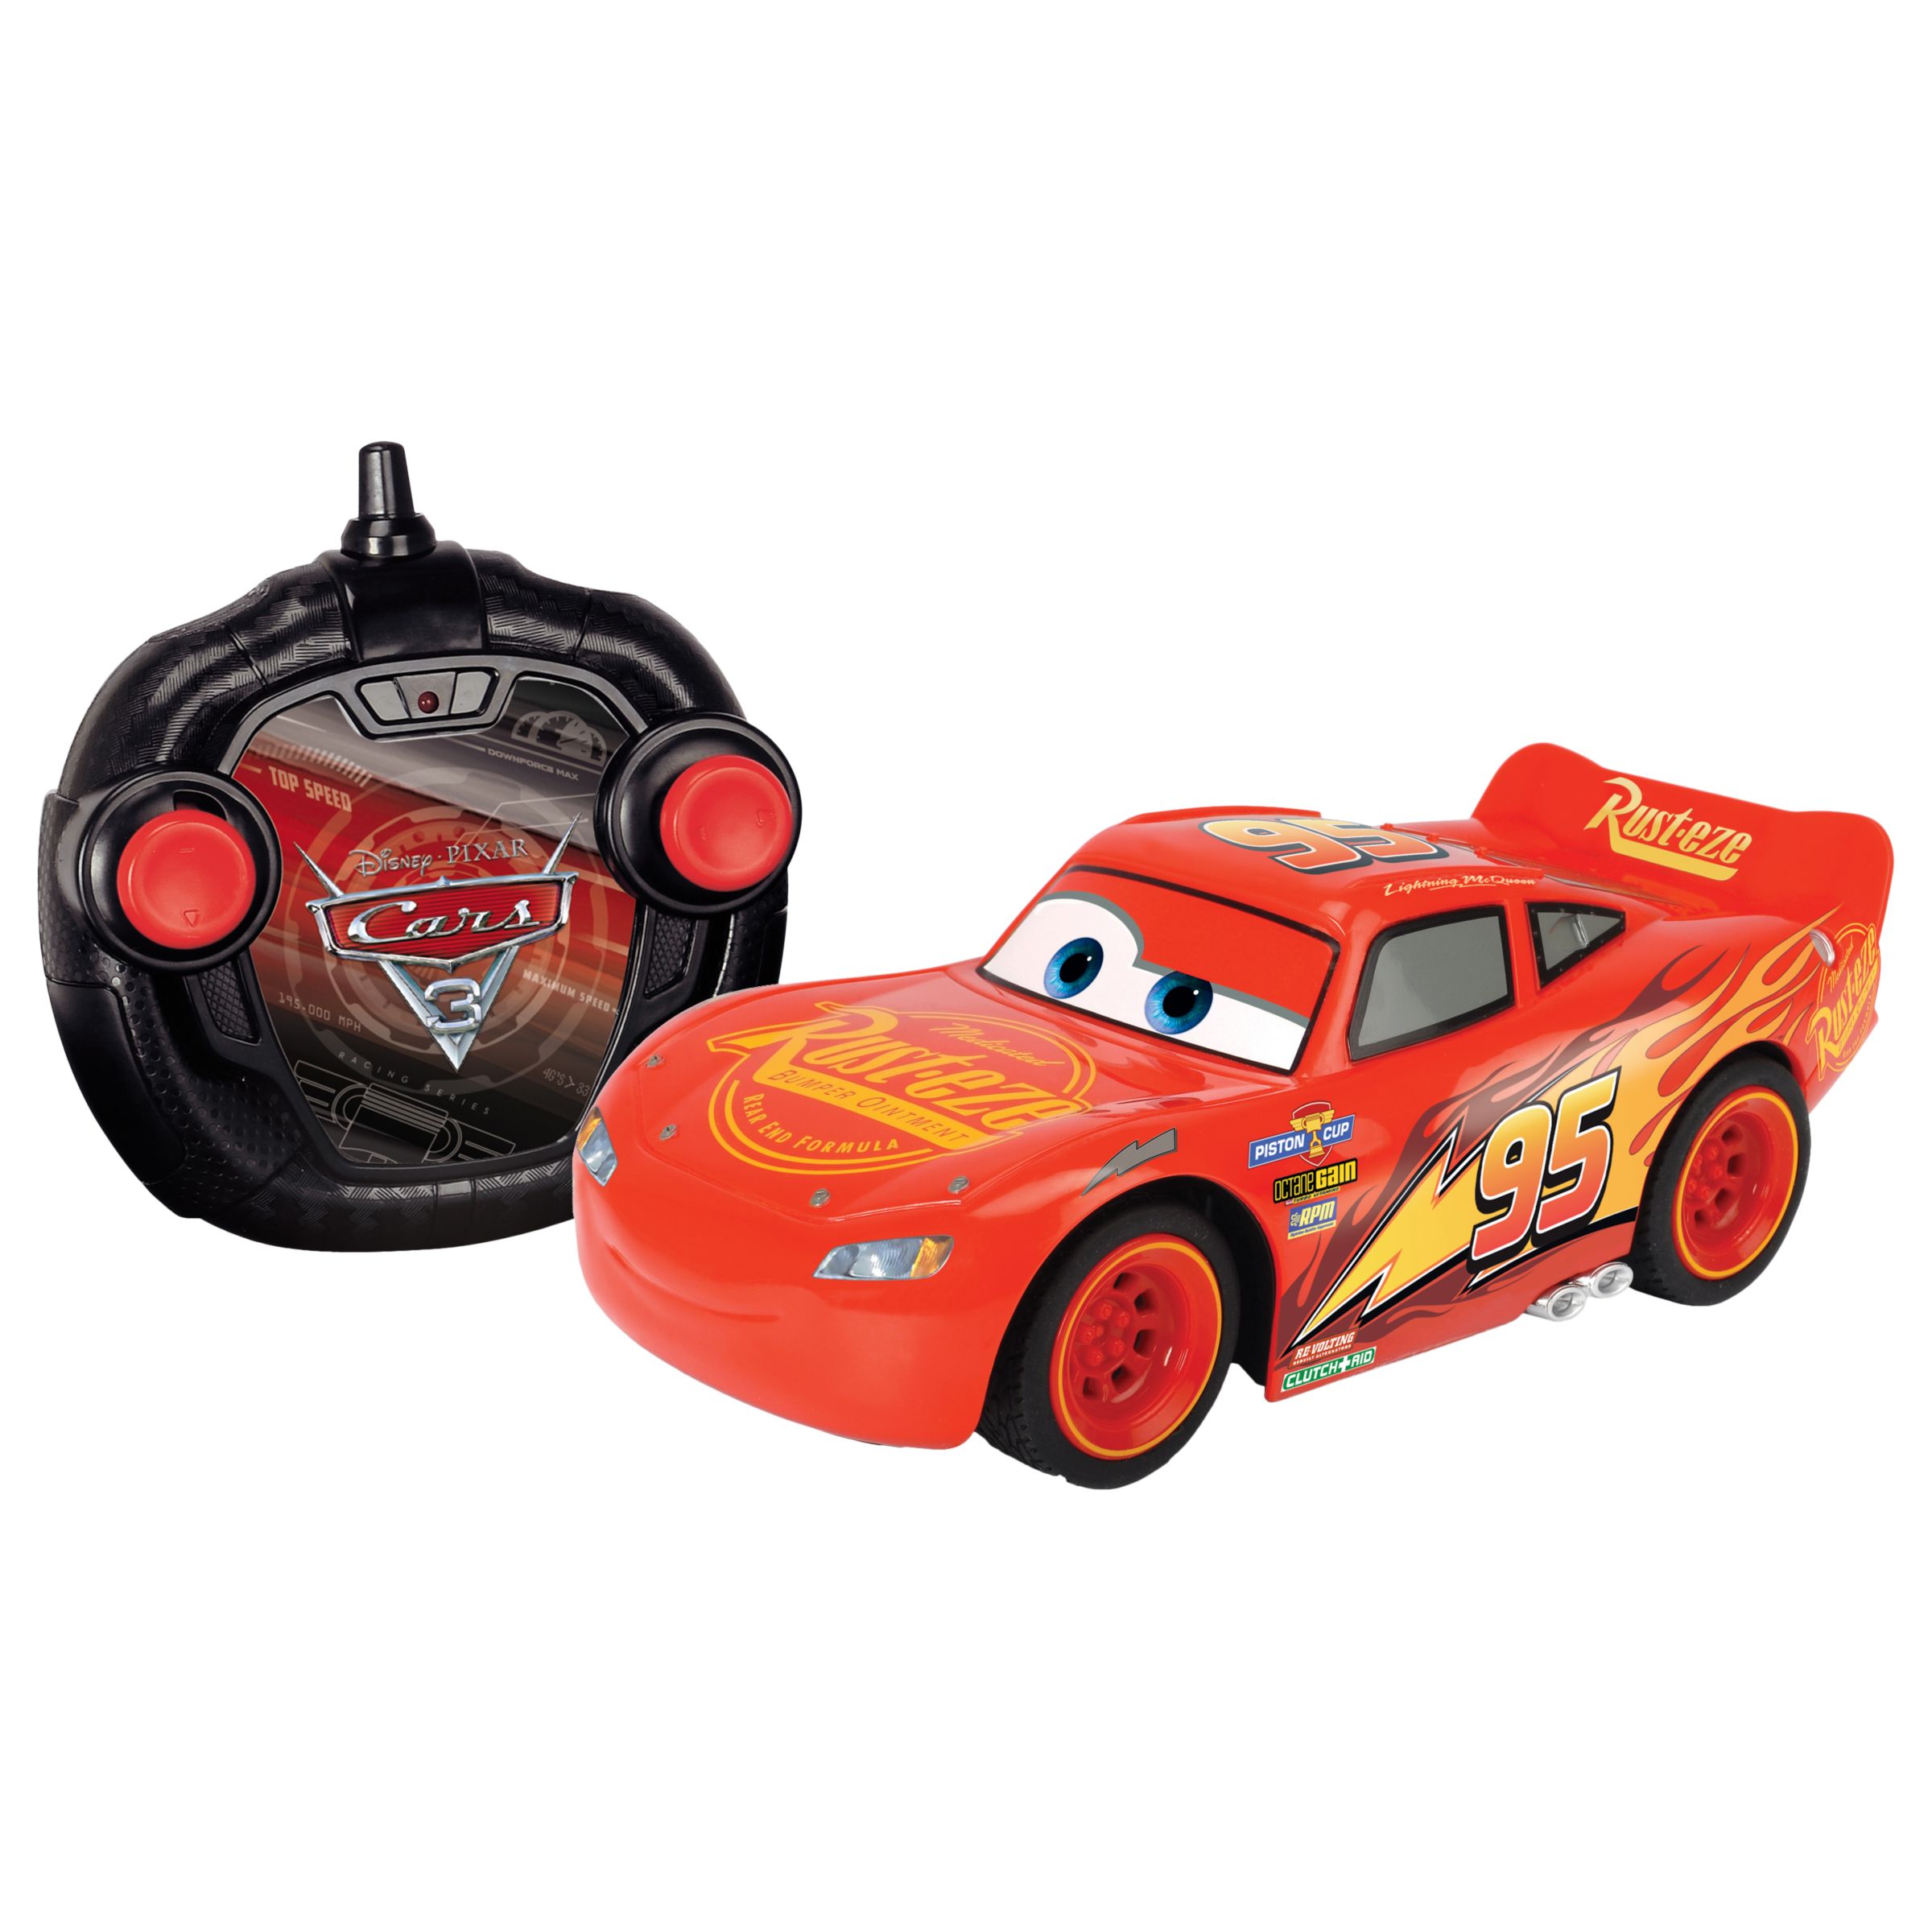 Disney Pixar Cars 3 Lightning McQueen Remote Control Toy